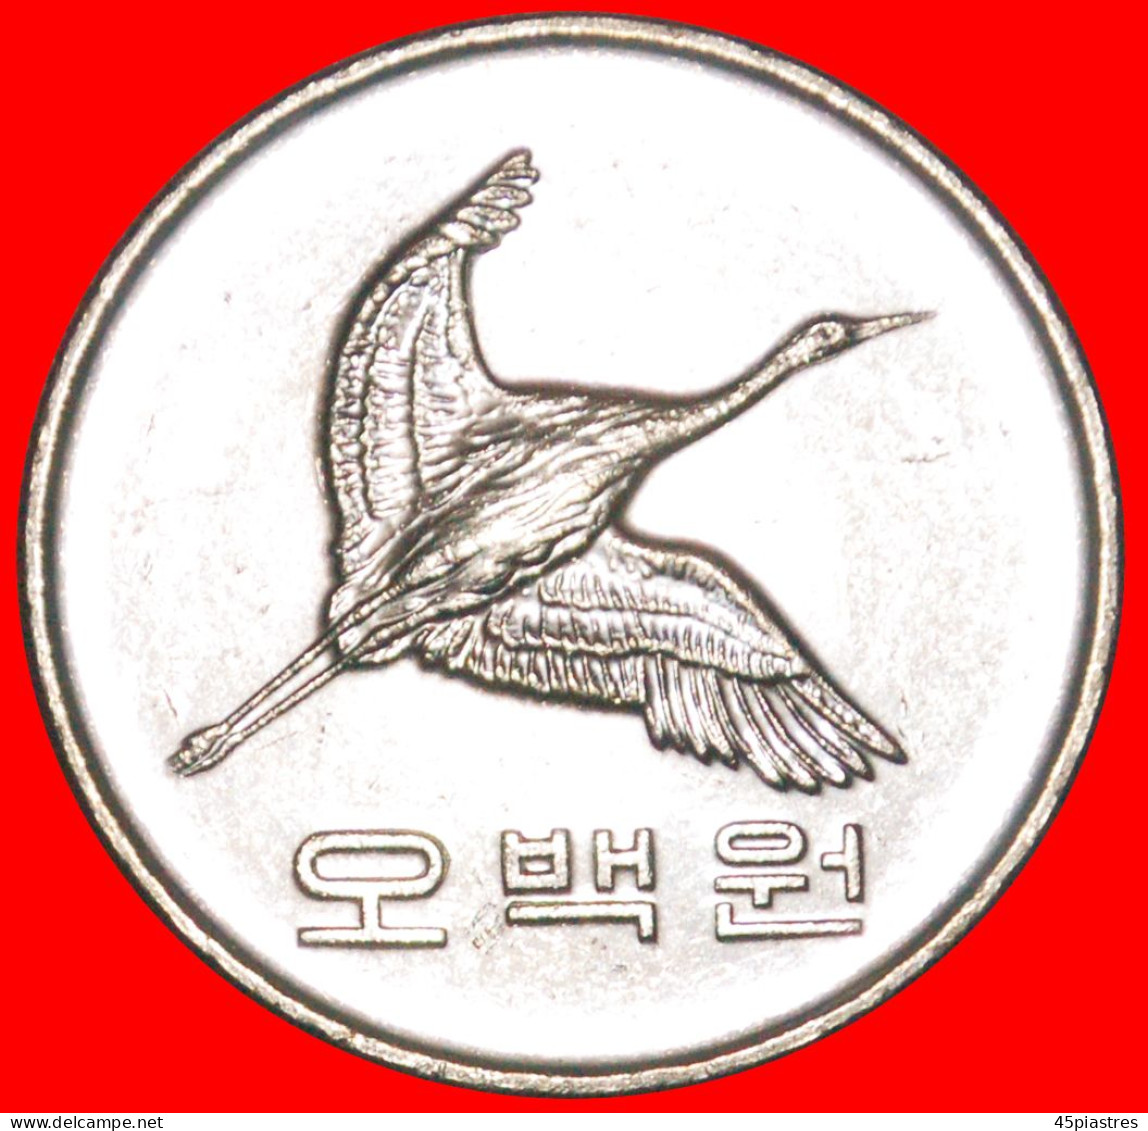 * MANCHURIAN CRANE (1982-2019): SOUTH KOREA  500 WON 2010 MINT LUSTRE! ·  LOW START · NO RESERVE! - Korea, South